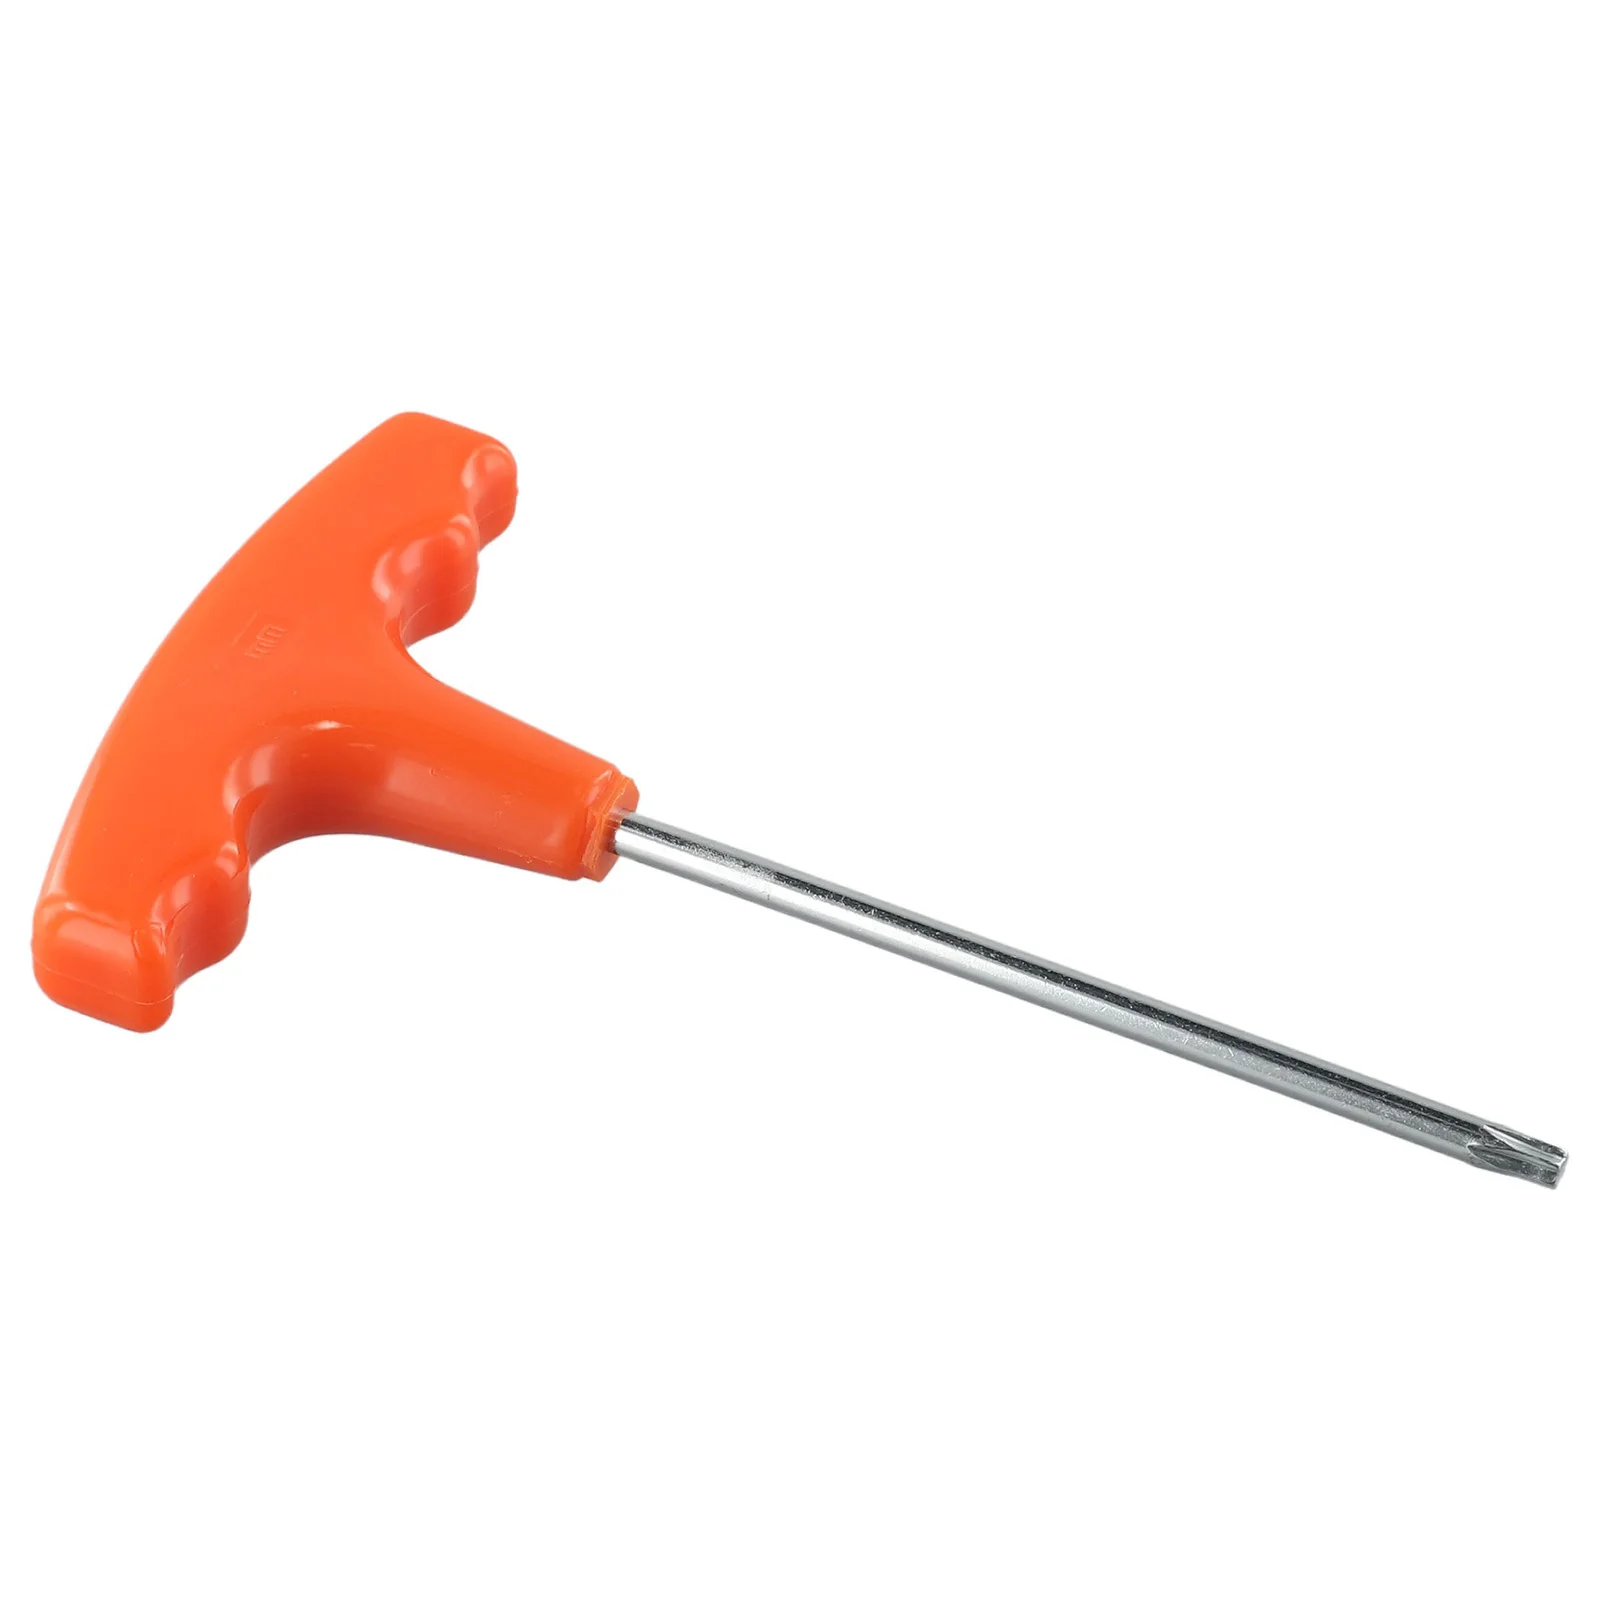 

T Handle Screwdriver Driver for Stihl Makita Plastic+Steel Orange+Silver # 0812 370 1000 Universal High Quality